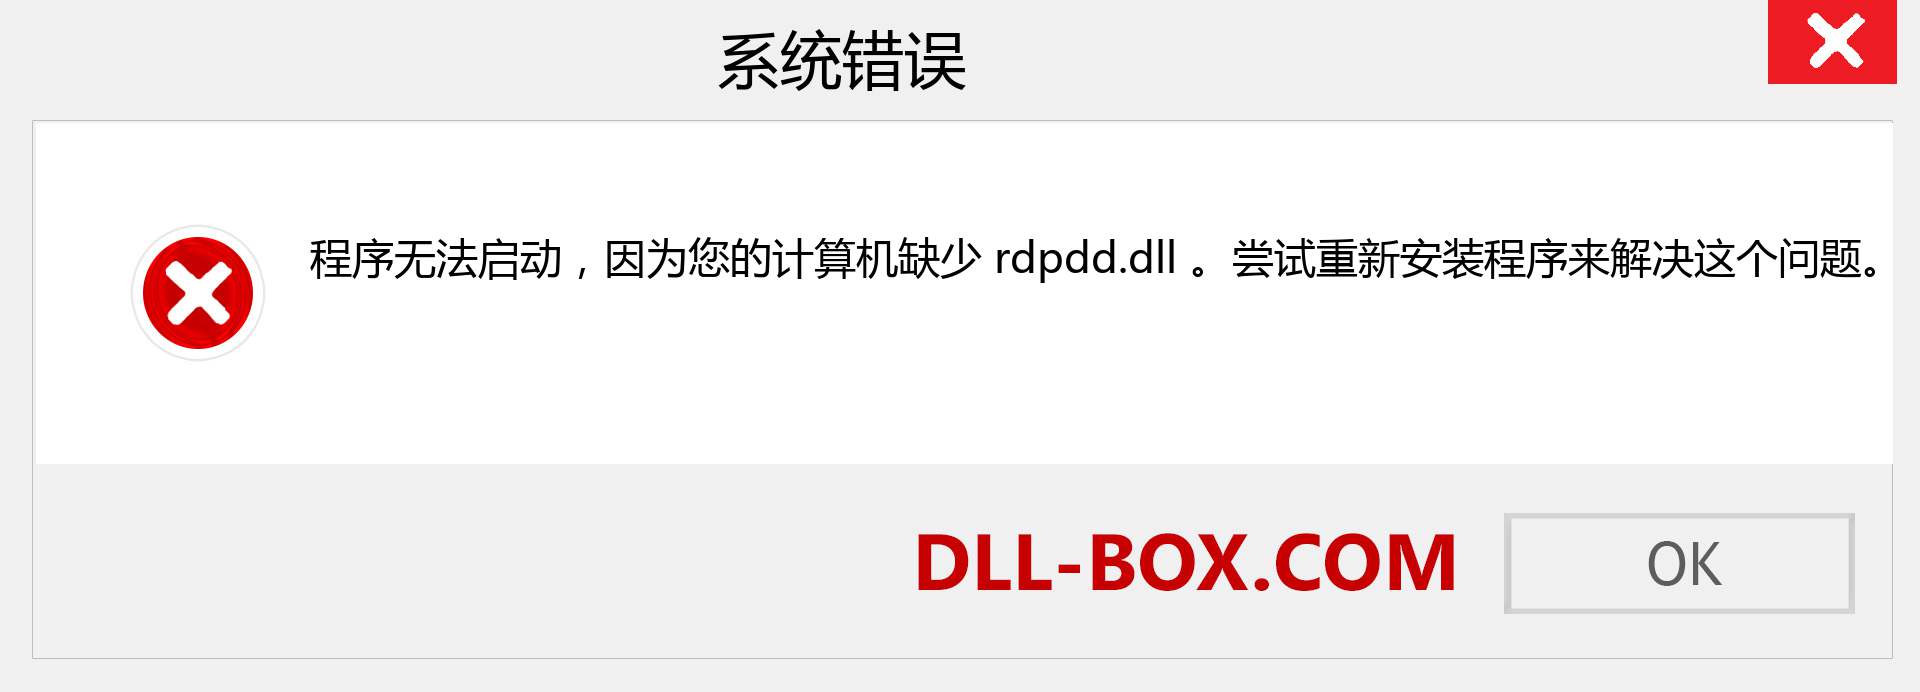 rdpdd.dll 文件丢失？。 适用于 Windows 7、8、10 的下载 - 修复 Windows、照片、图像上的 rdpdd dll 丢失错误